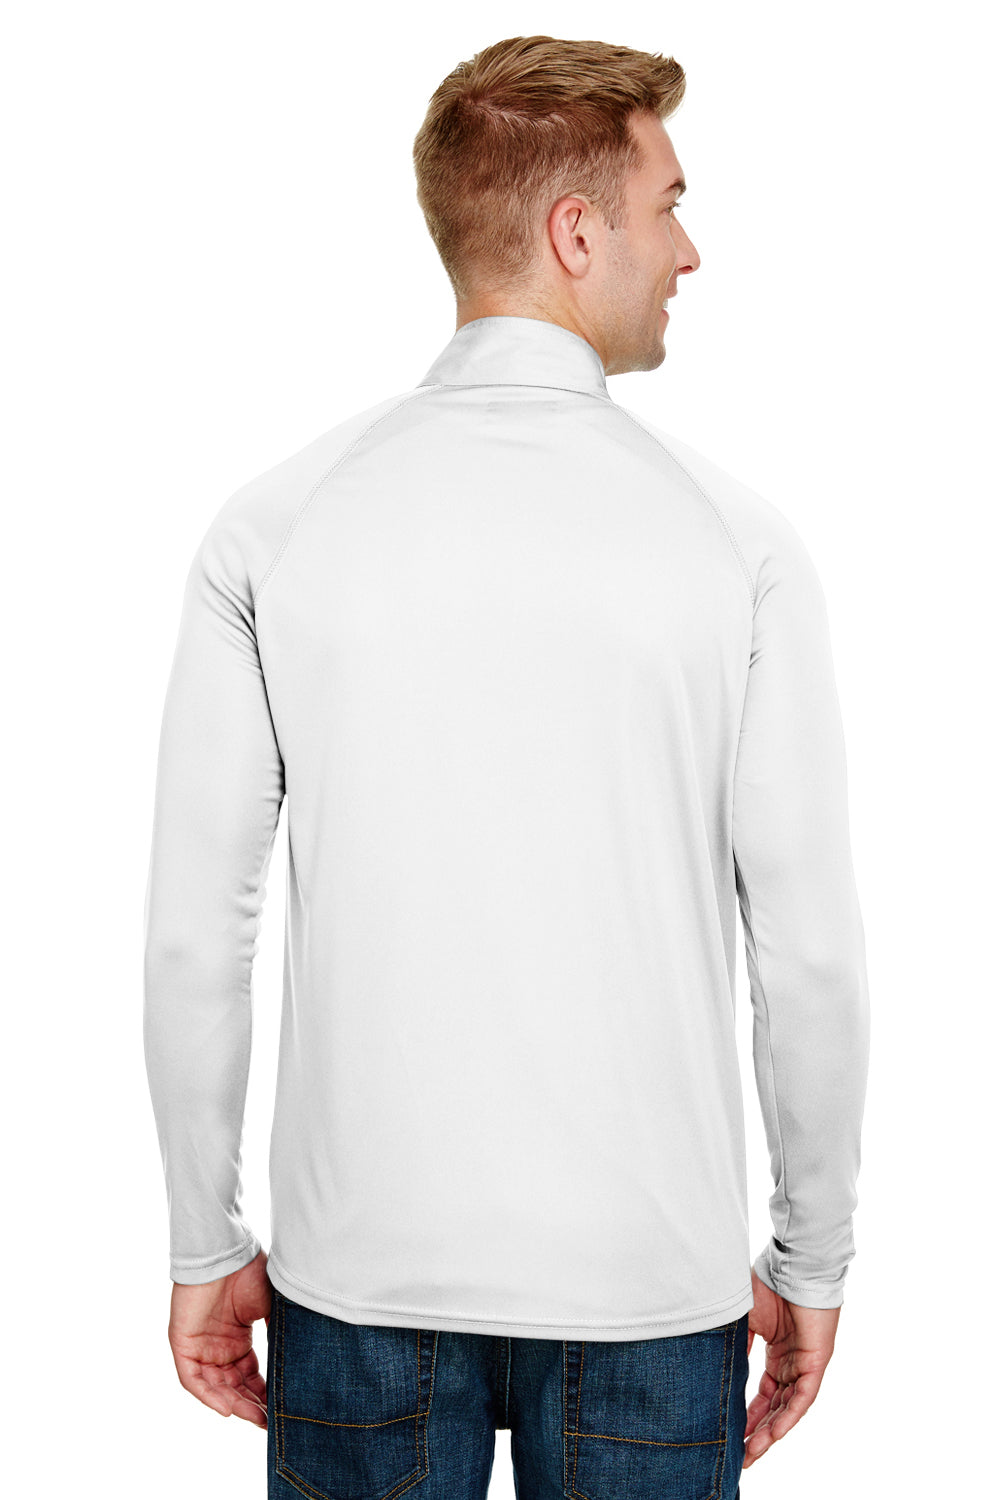 A4 N4268 Mens Daily Performance Moisture Wicking 1/4 Zip Sweatshirt White Model Back